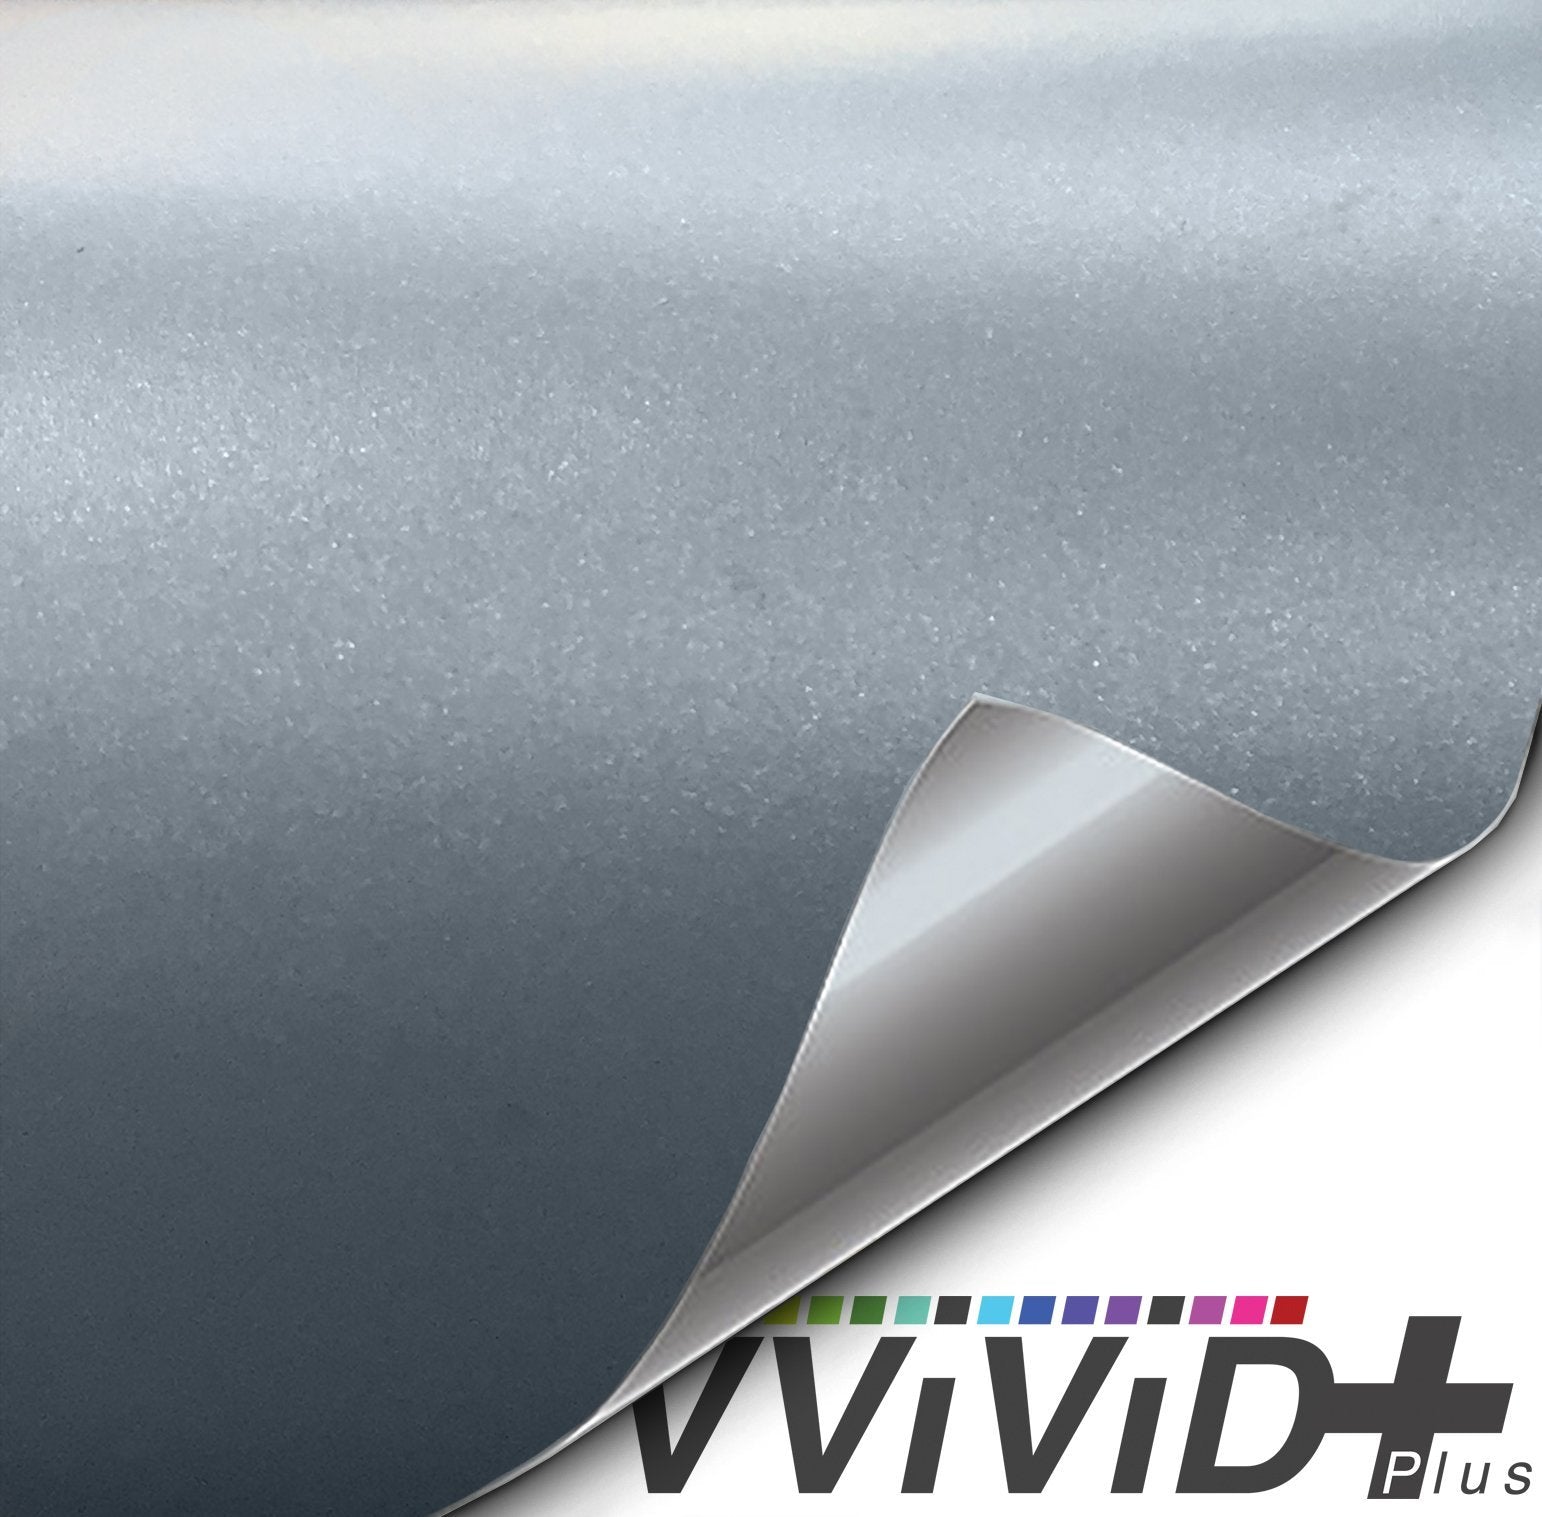 VViViD+ Matte METALLIC iridium silver grey vinyl wrap film on sale now!